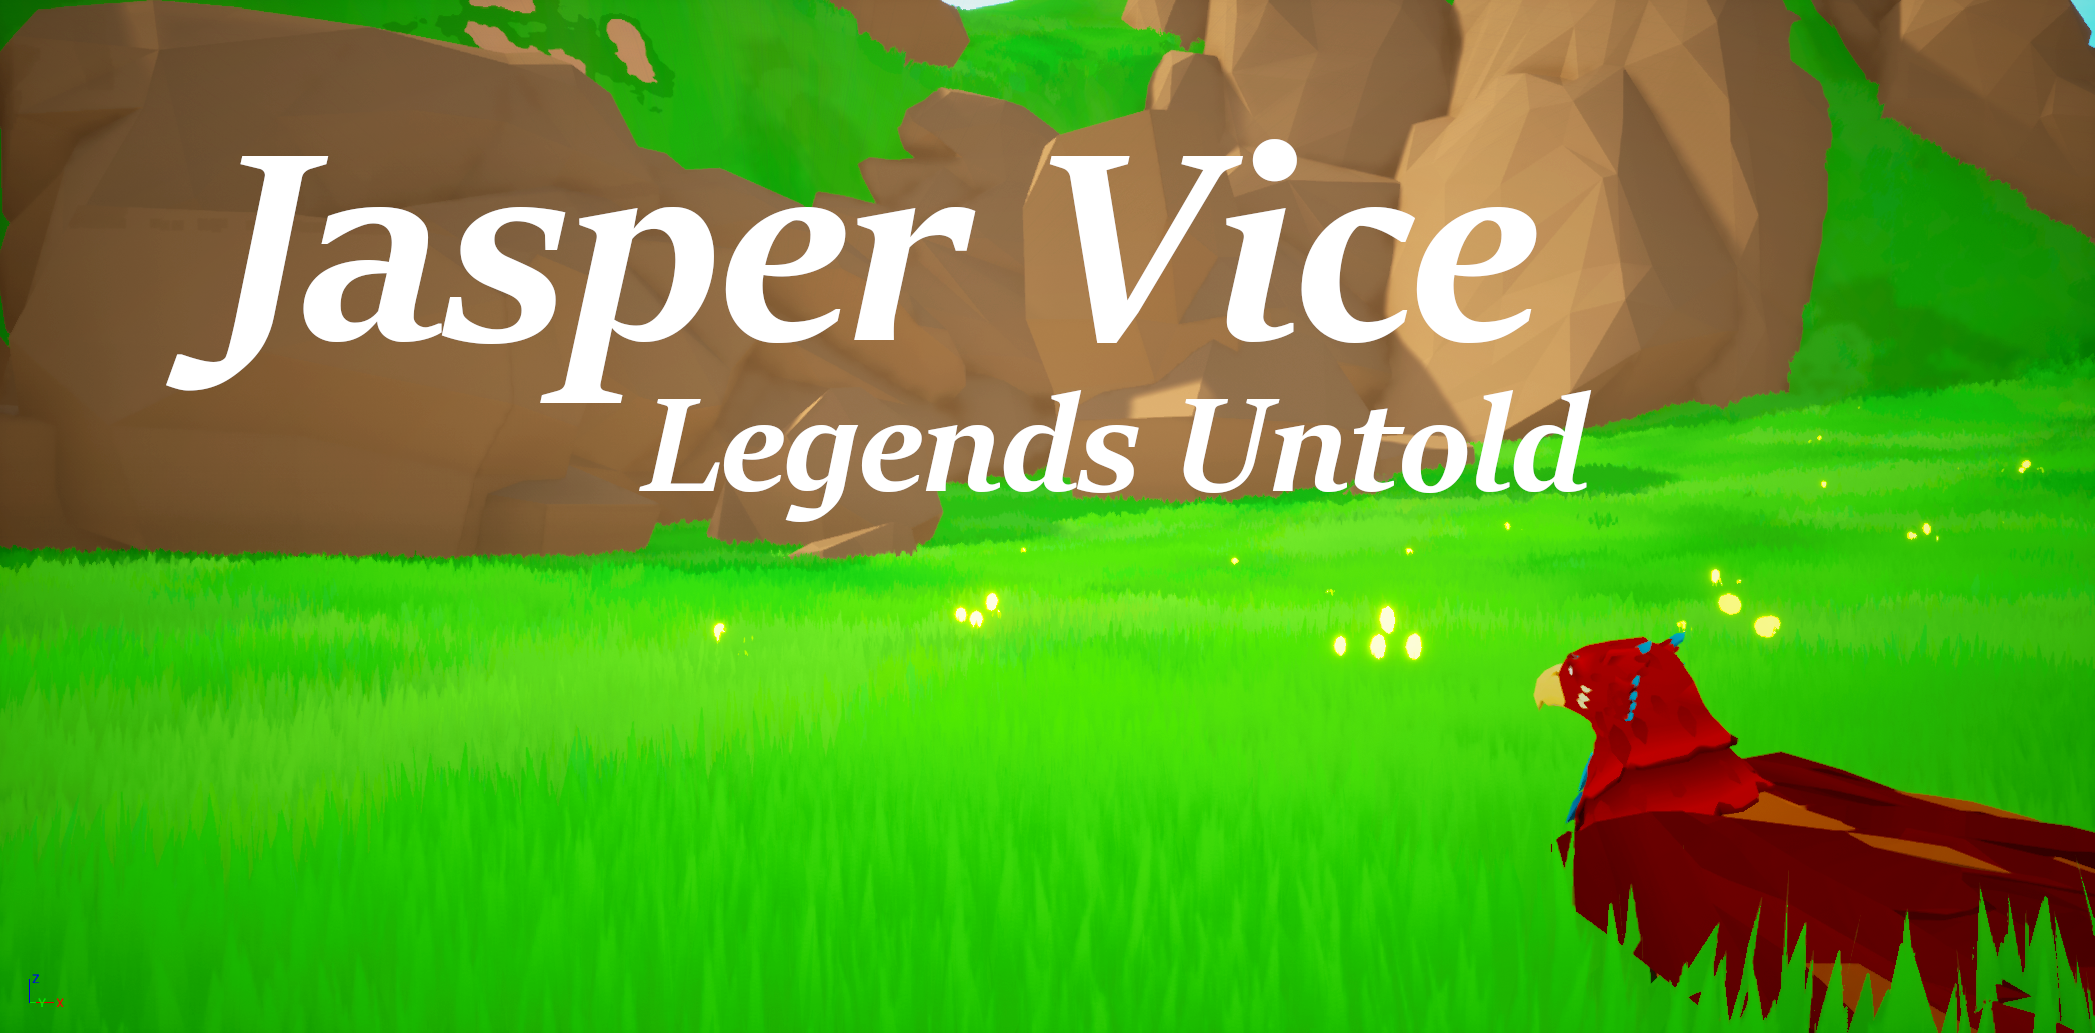 Jasper Vice: Legends Untold